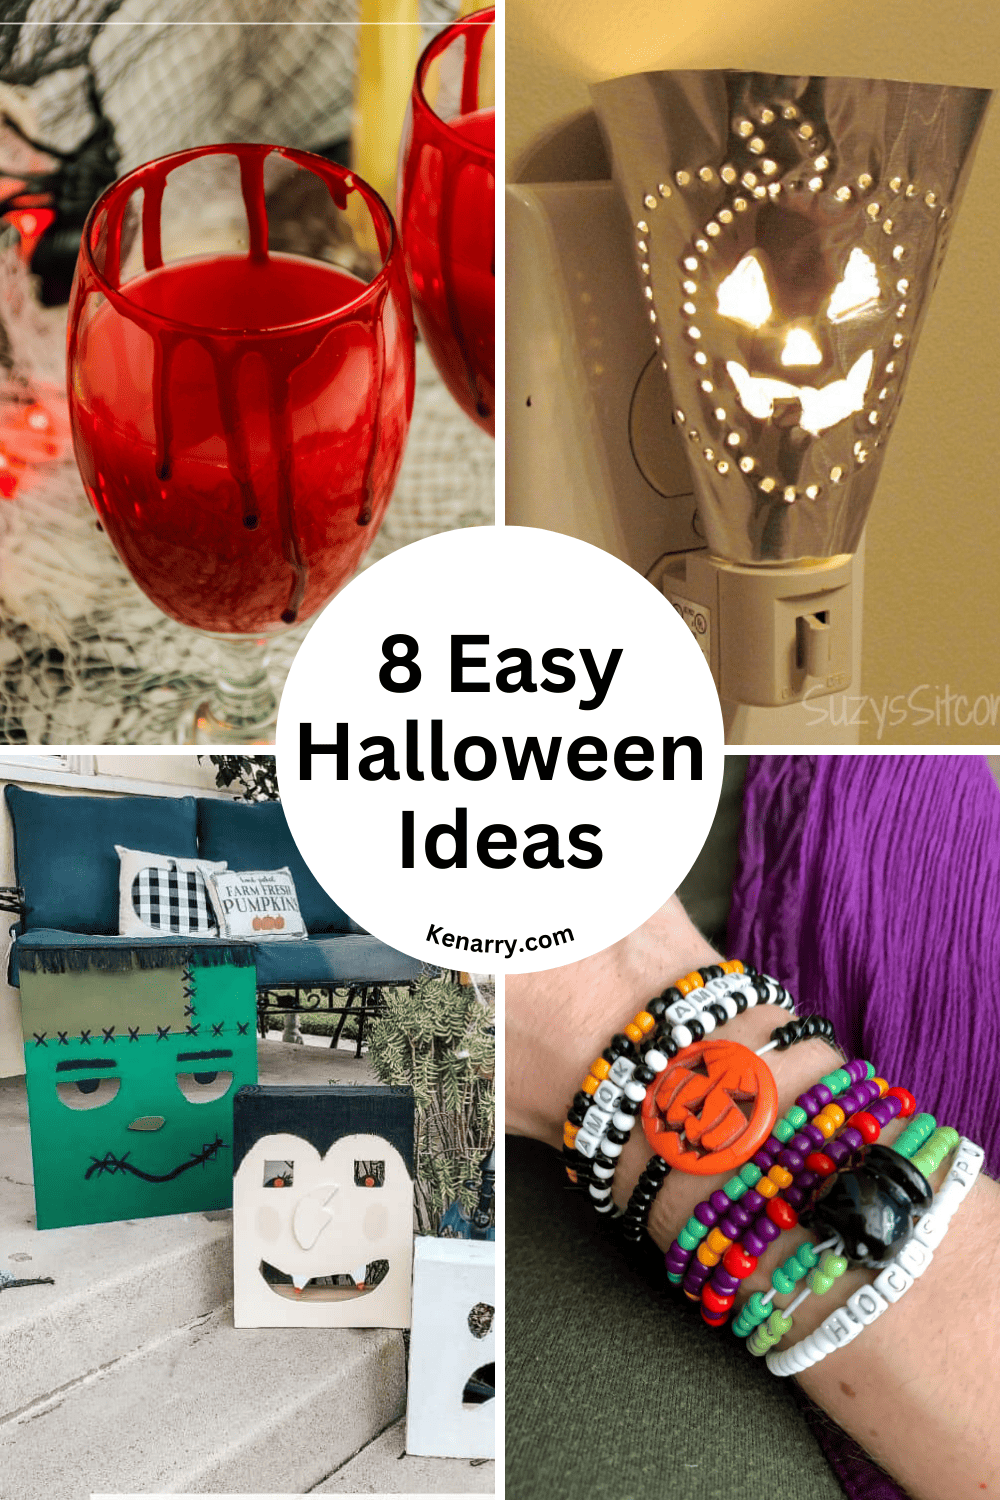 8 Easy Halloween Ideas from Kenarry.com